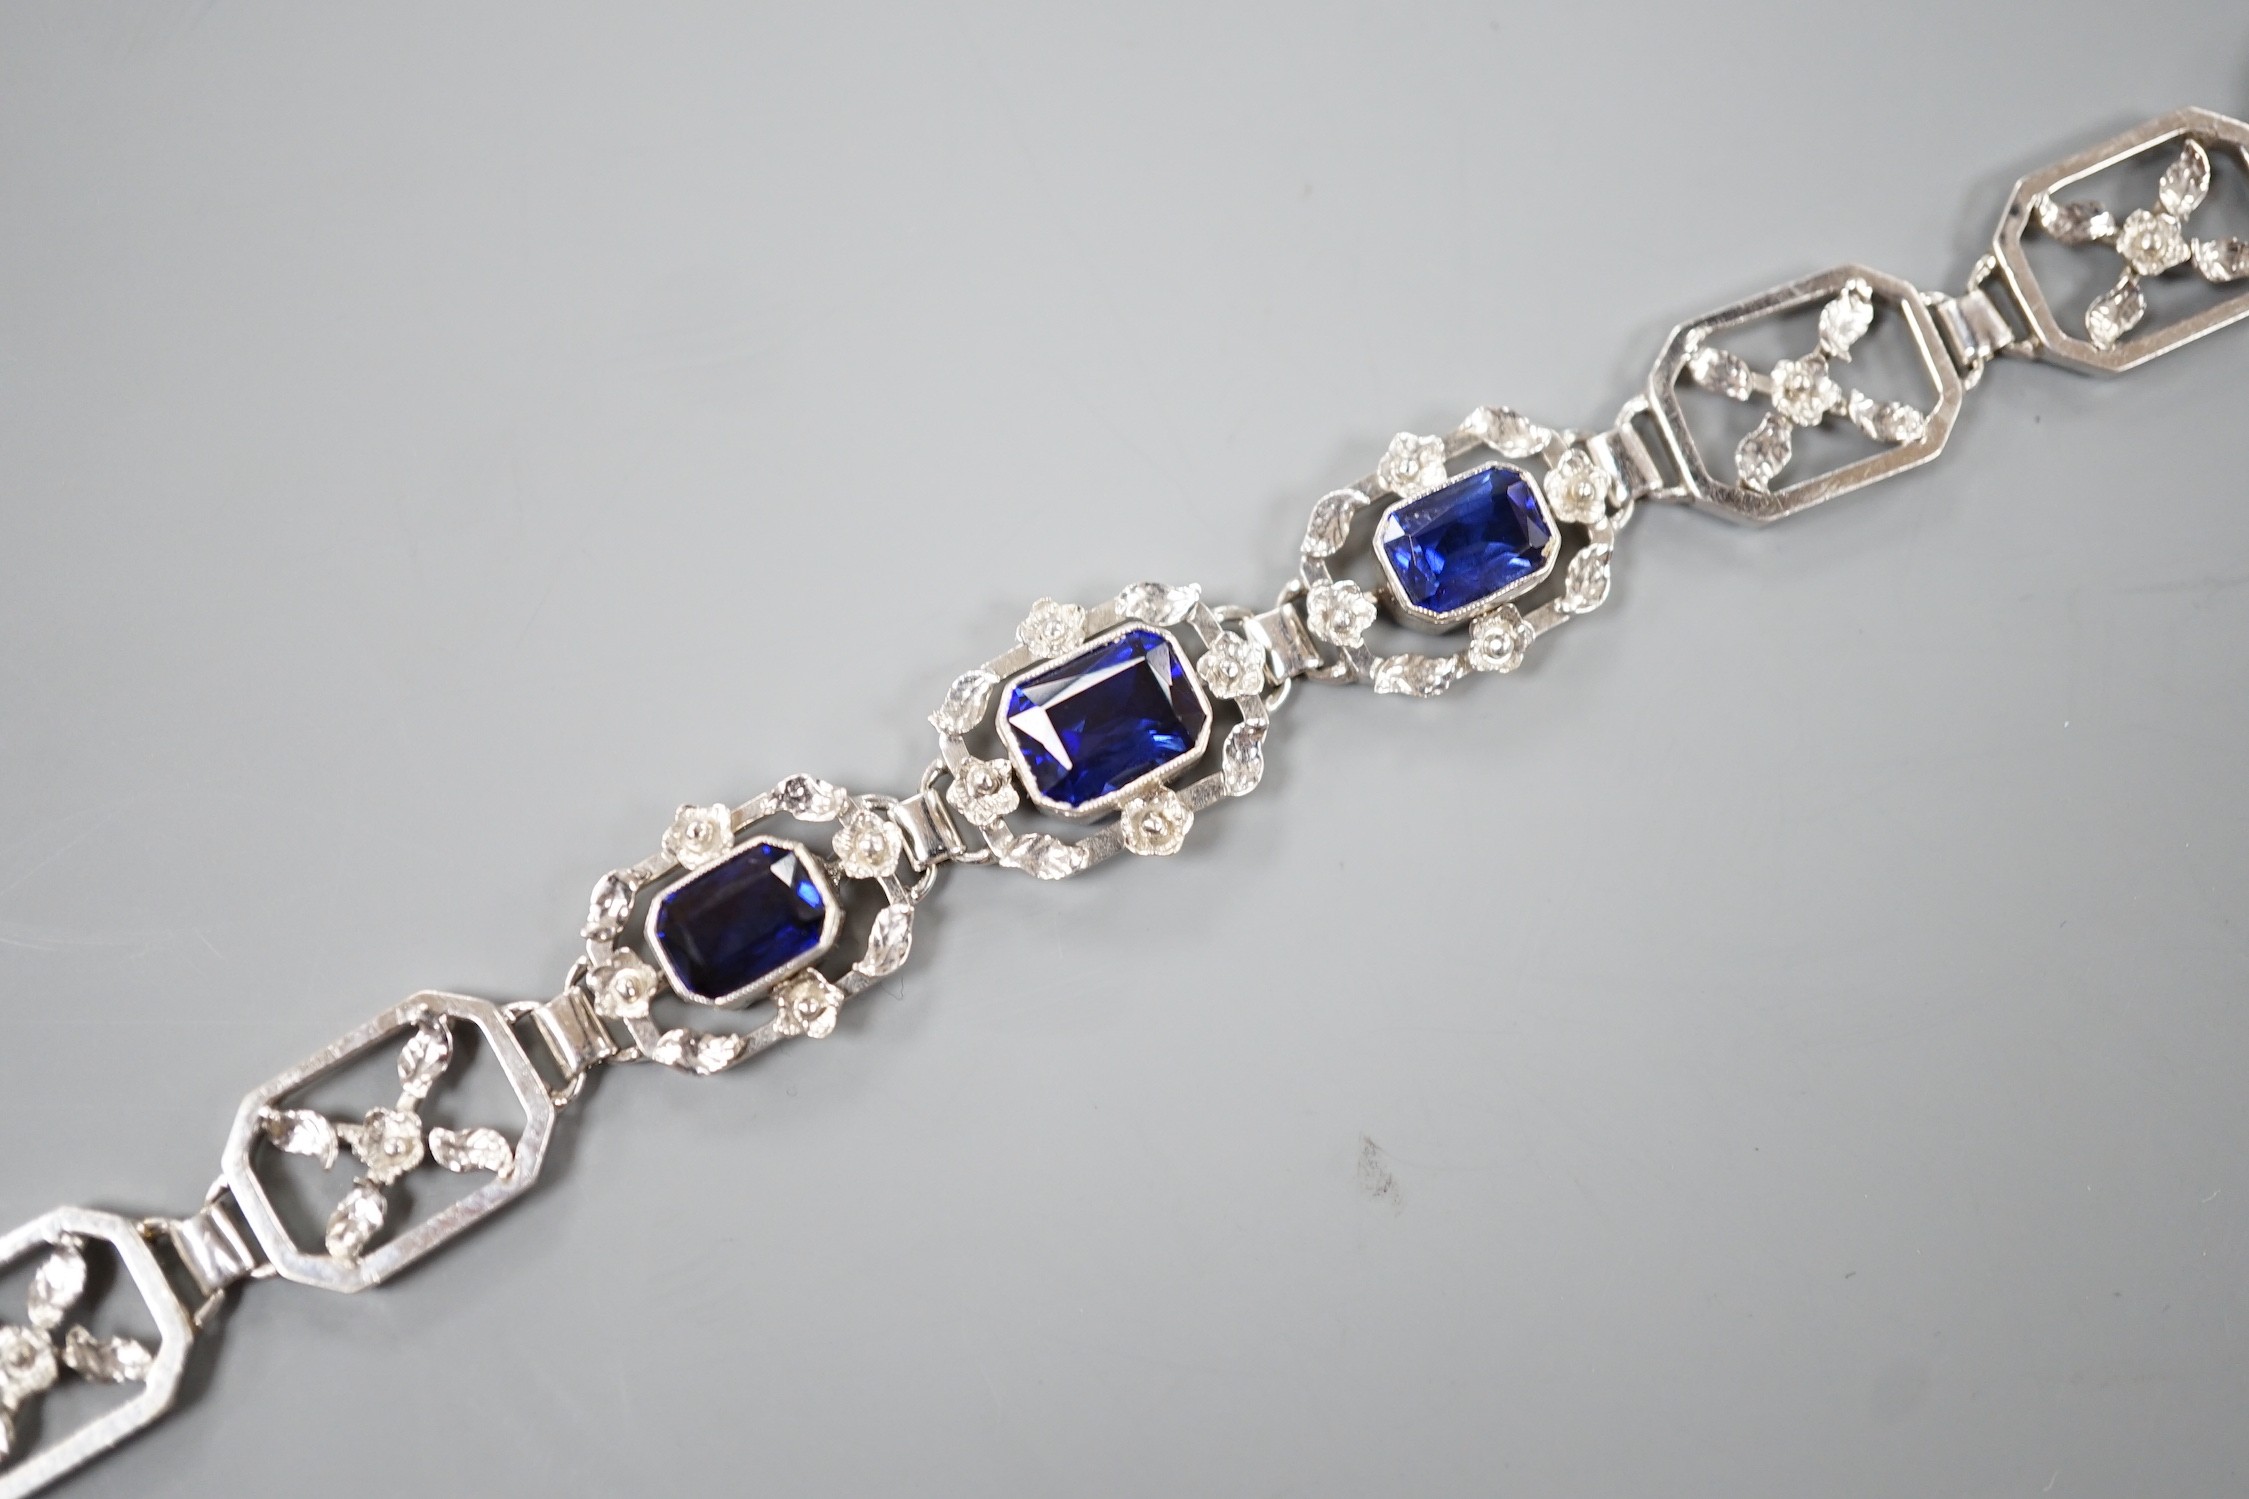 A modern 9ct white metal and three stone emerald cut sapphire set pierced link bracelet, approx. 18cm, gross weight 16.7 grams.